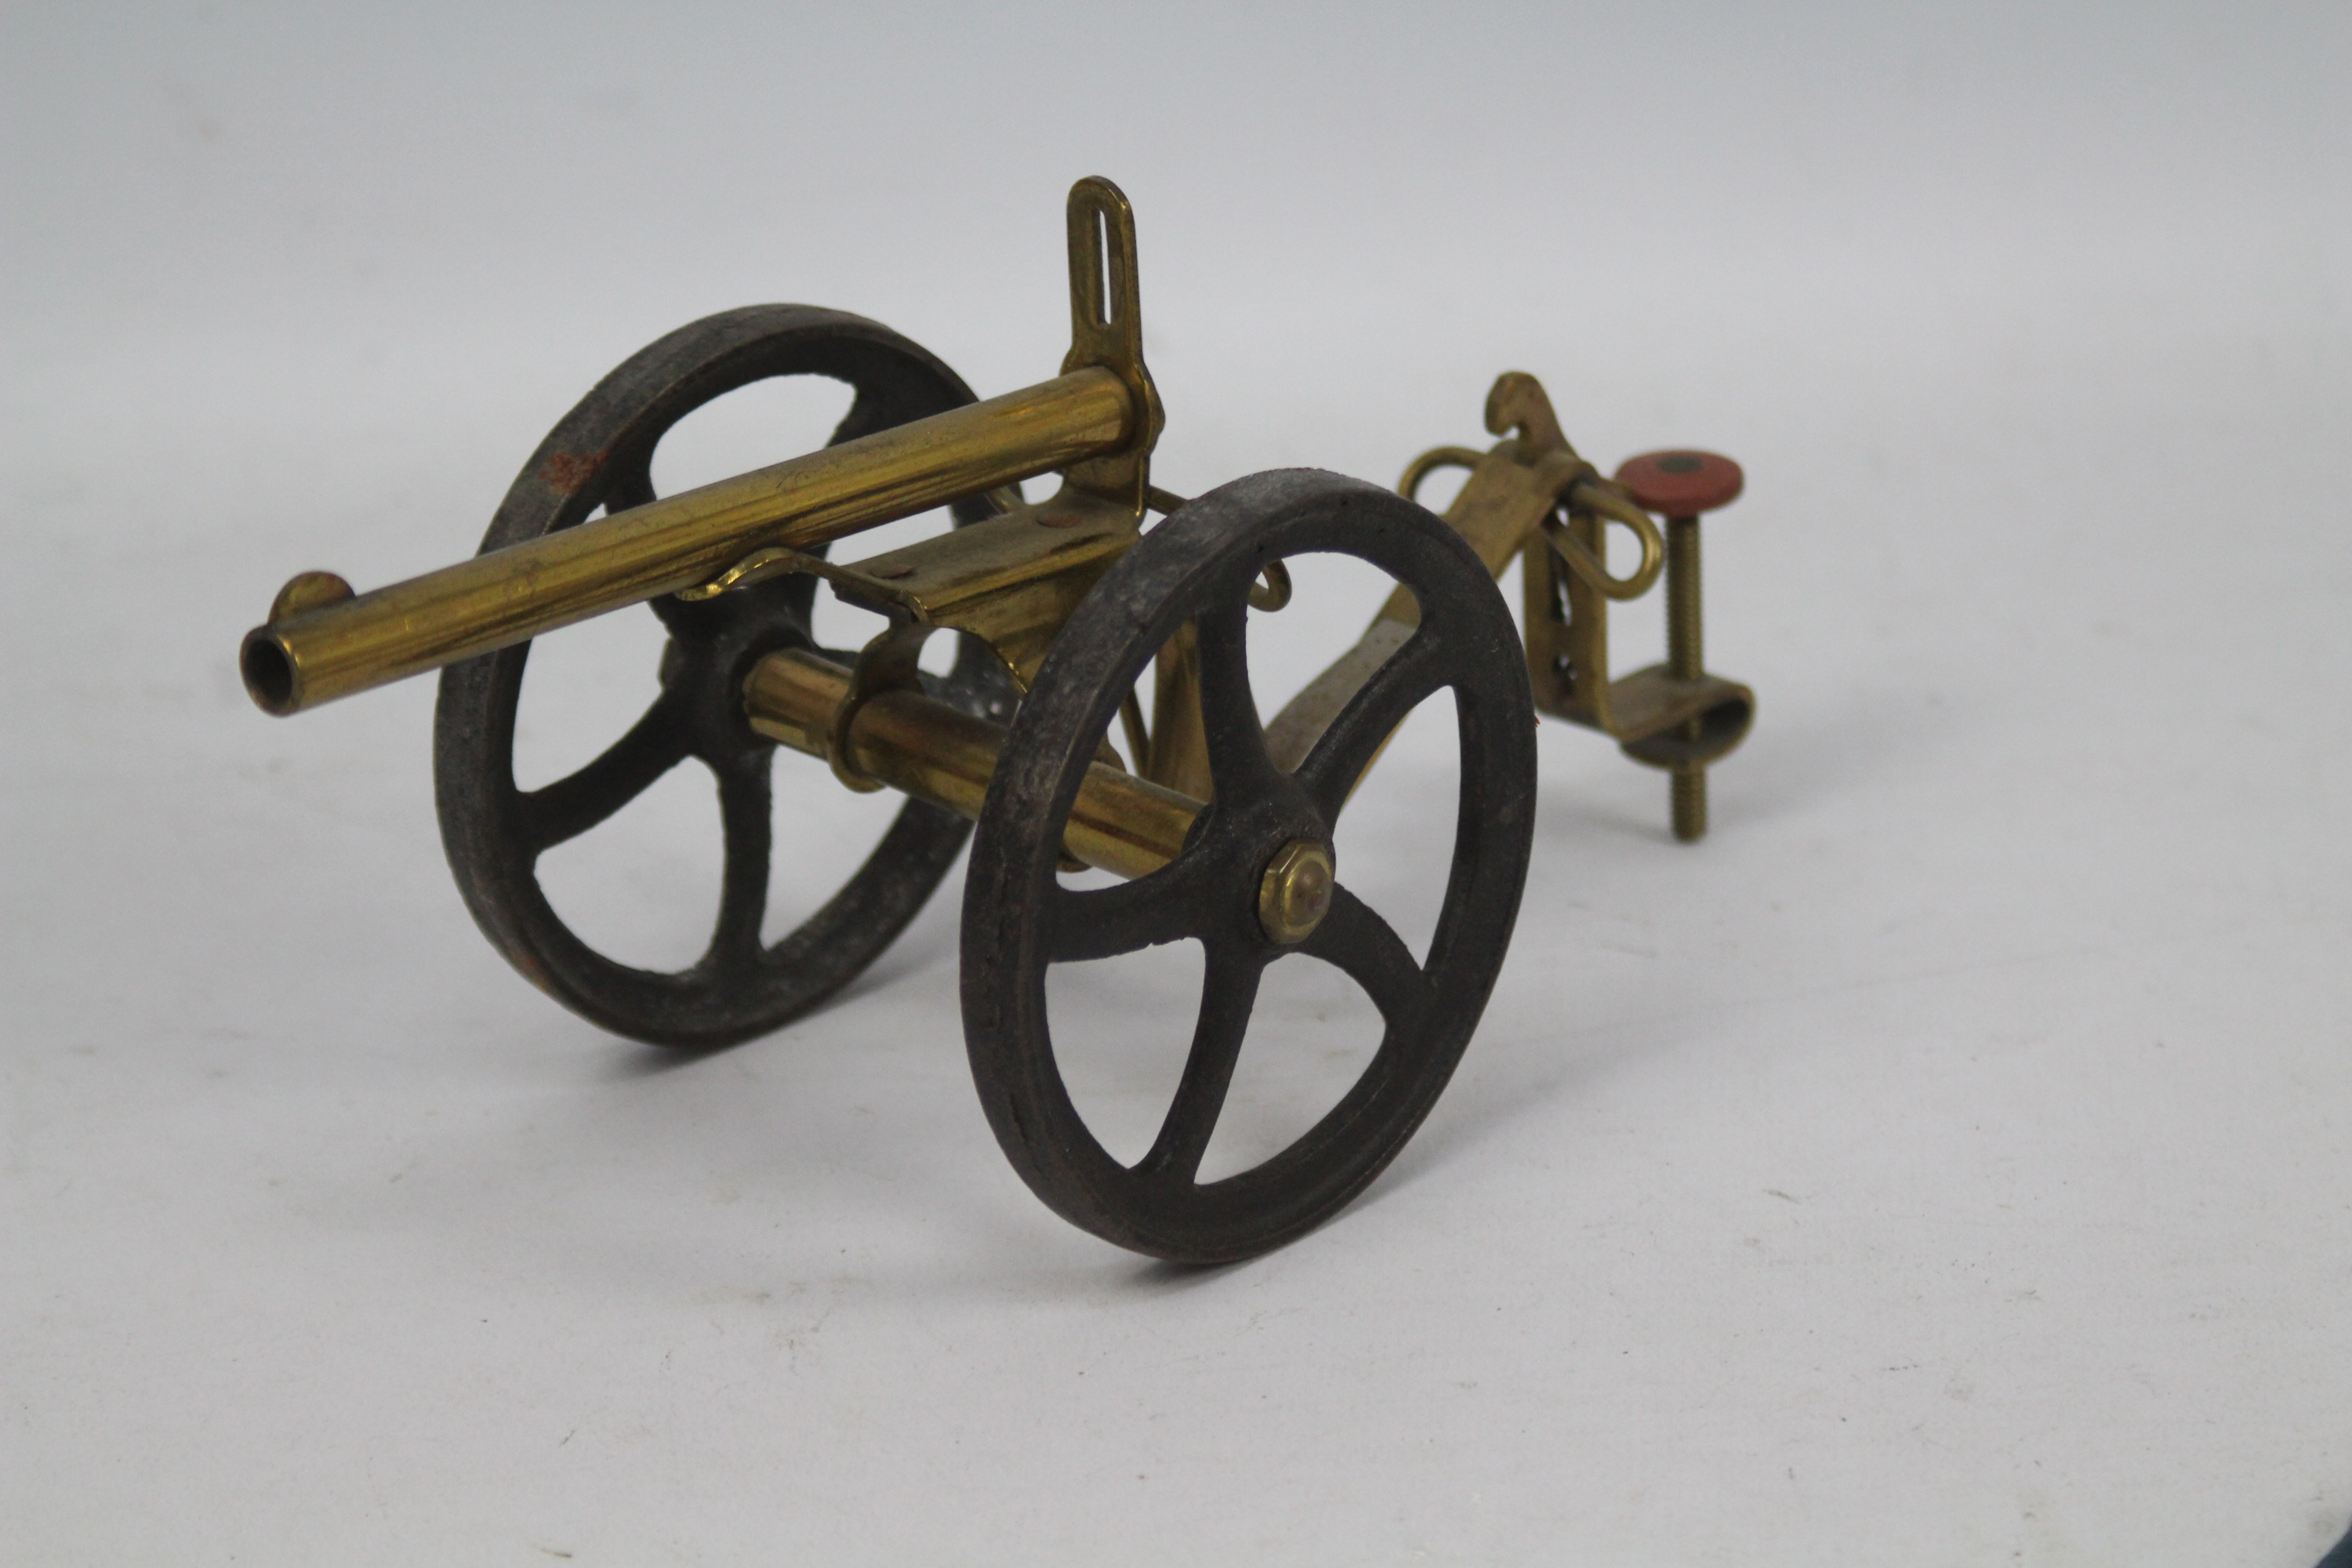 Lambton Parlour Game - a model Lambton Cannon / Gun with original box, - Image 2 of 5